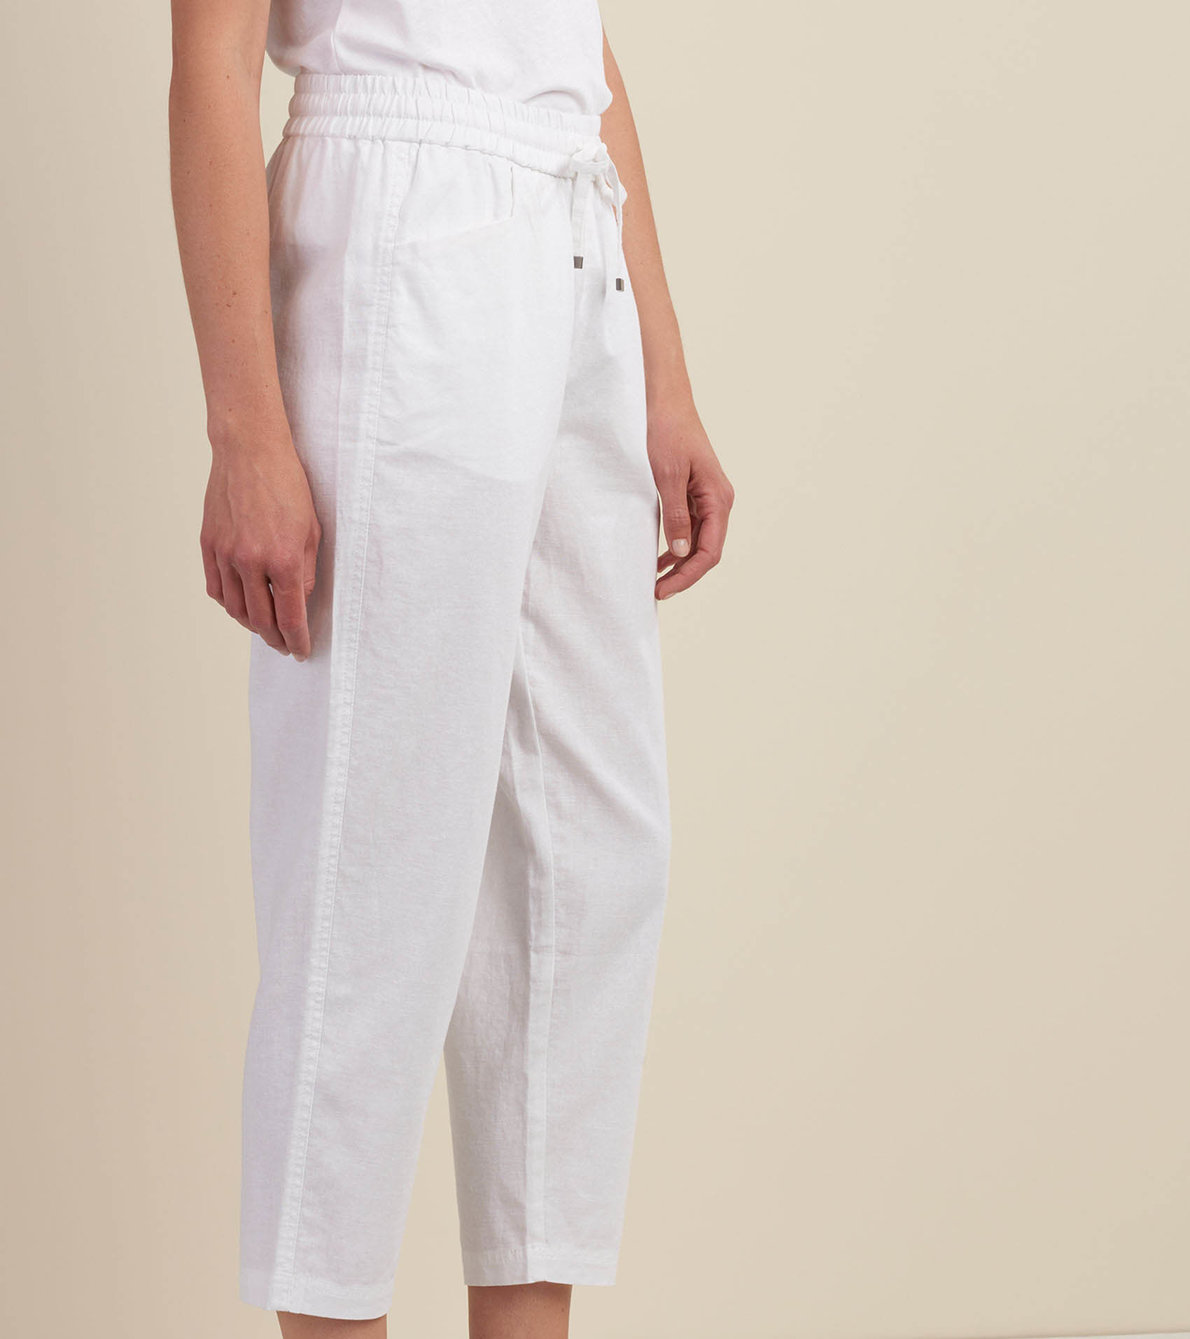 View larger image of Sierra Cotton Linen Pants - White